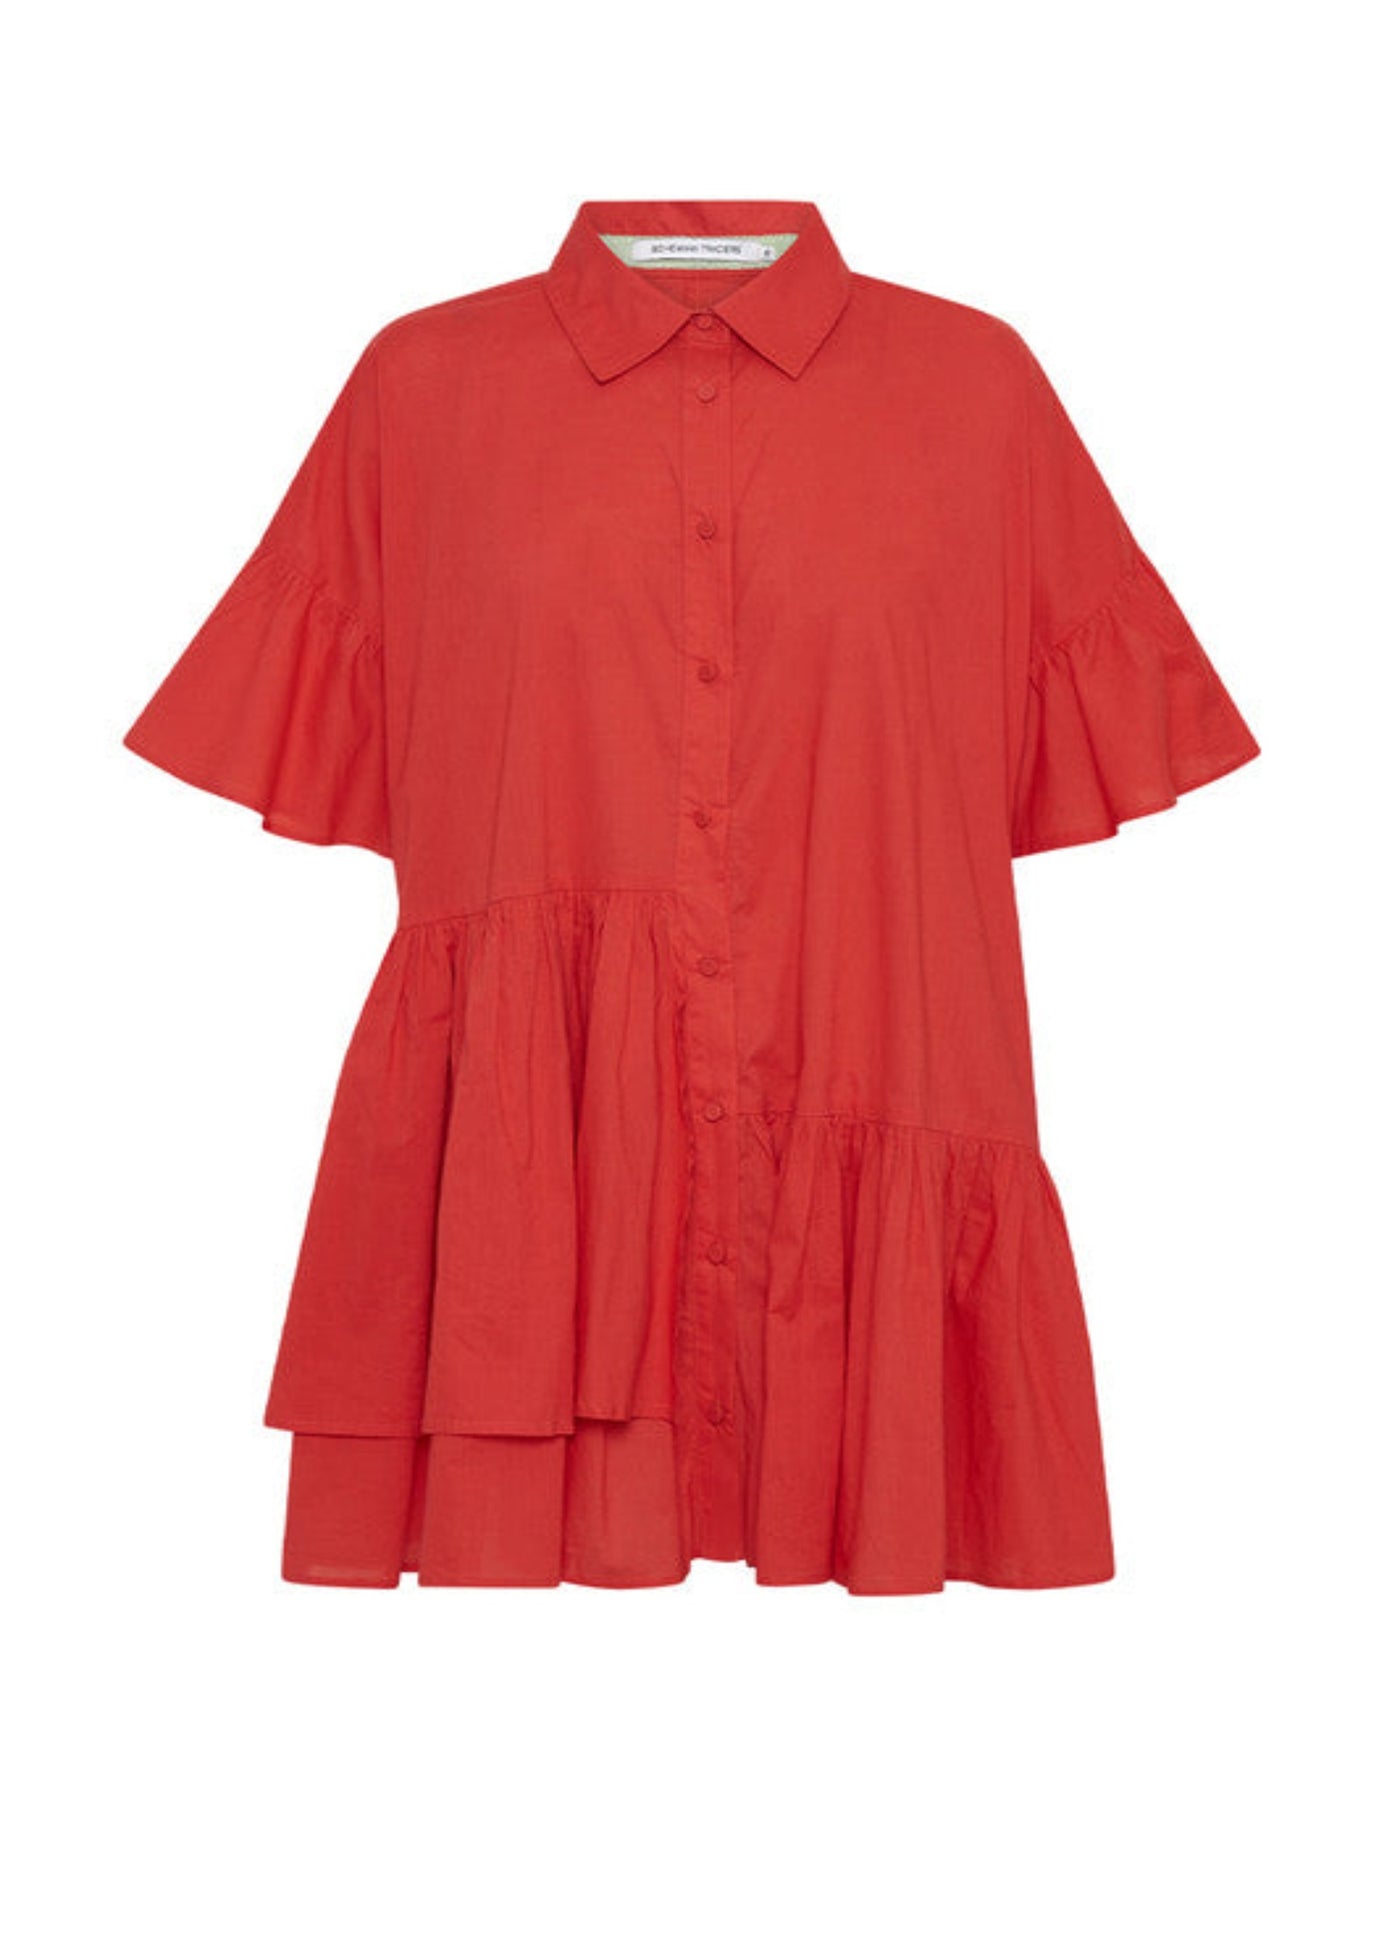 The Genoa Dress in Rhubarb Red